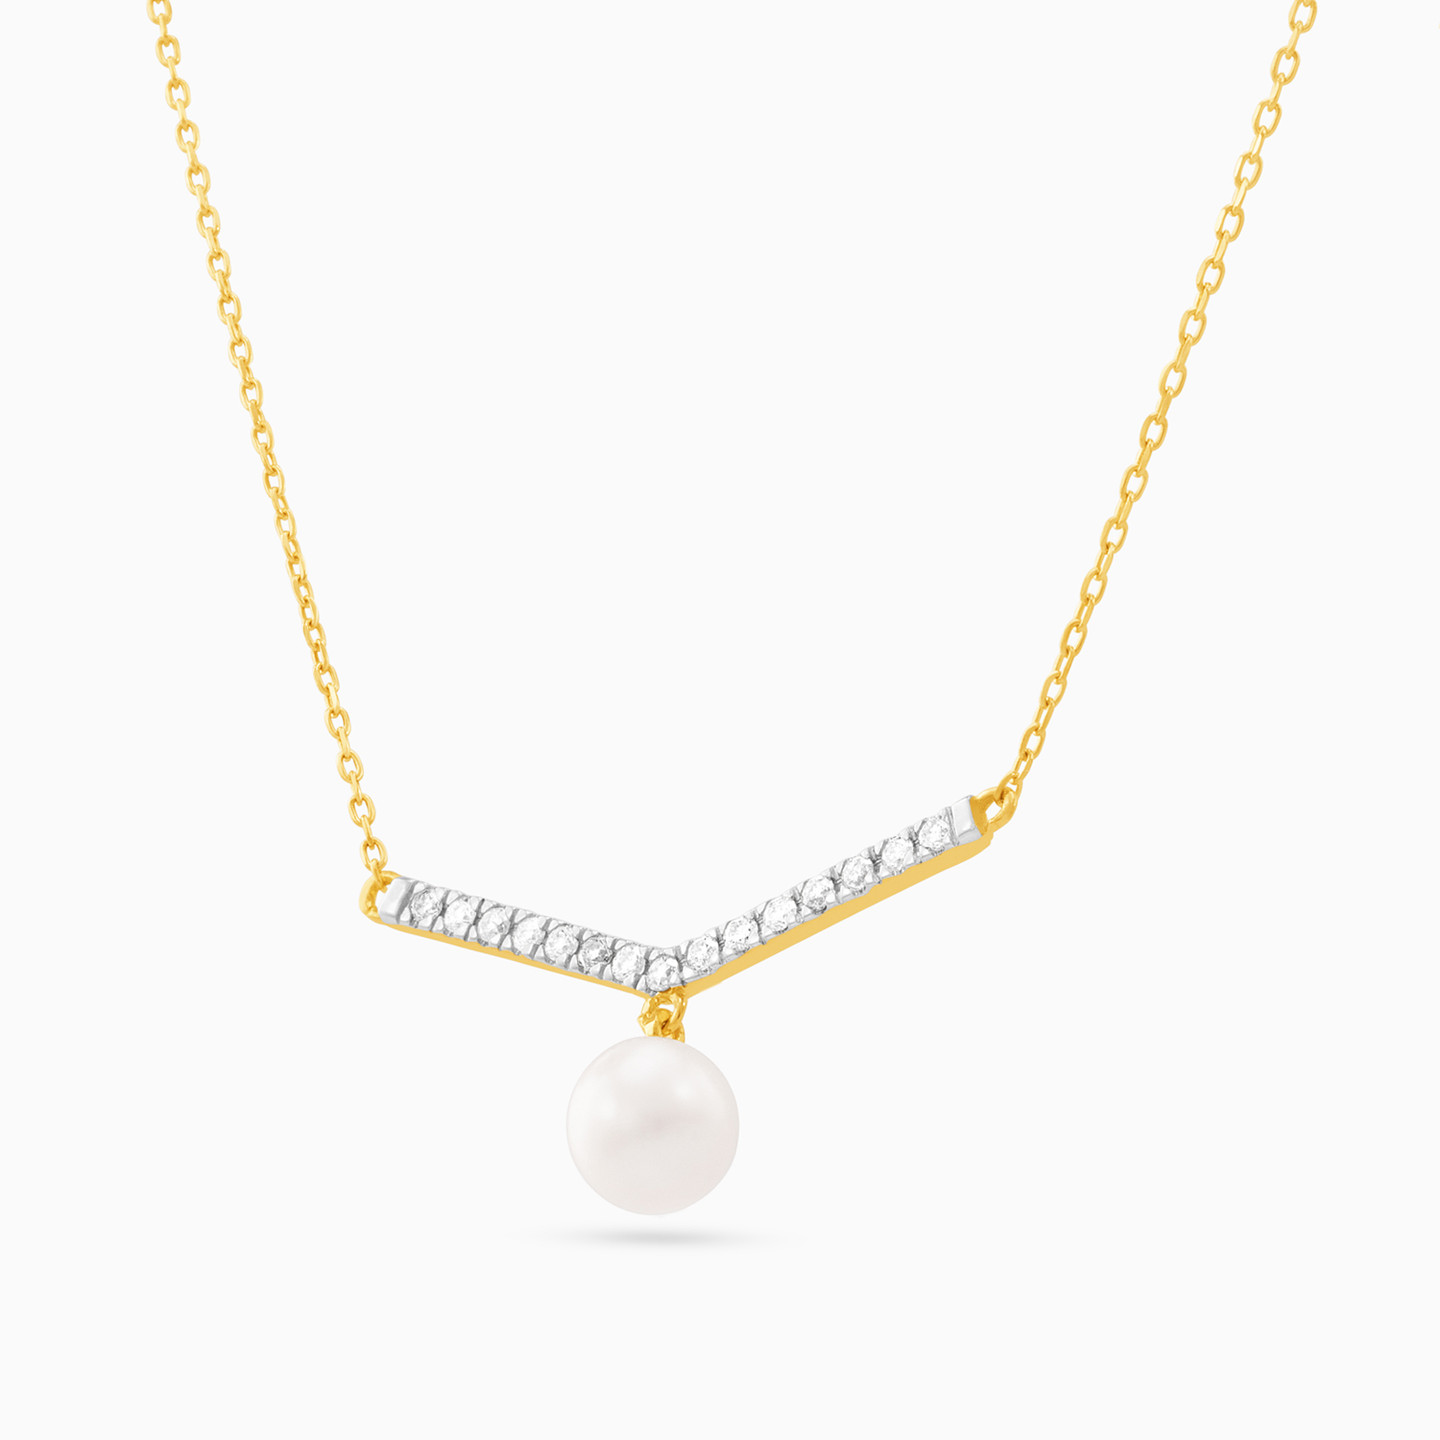 18K Gold Diamond & Pearl Pendant Necklace - 2